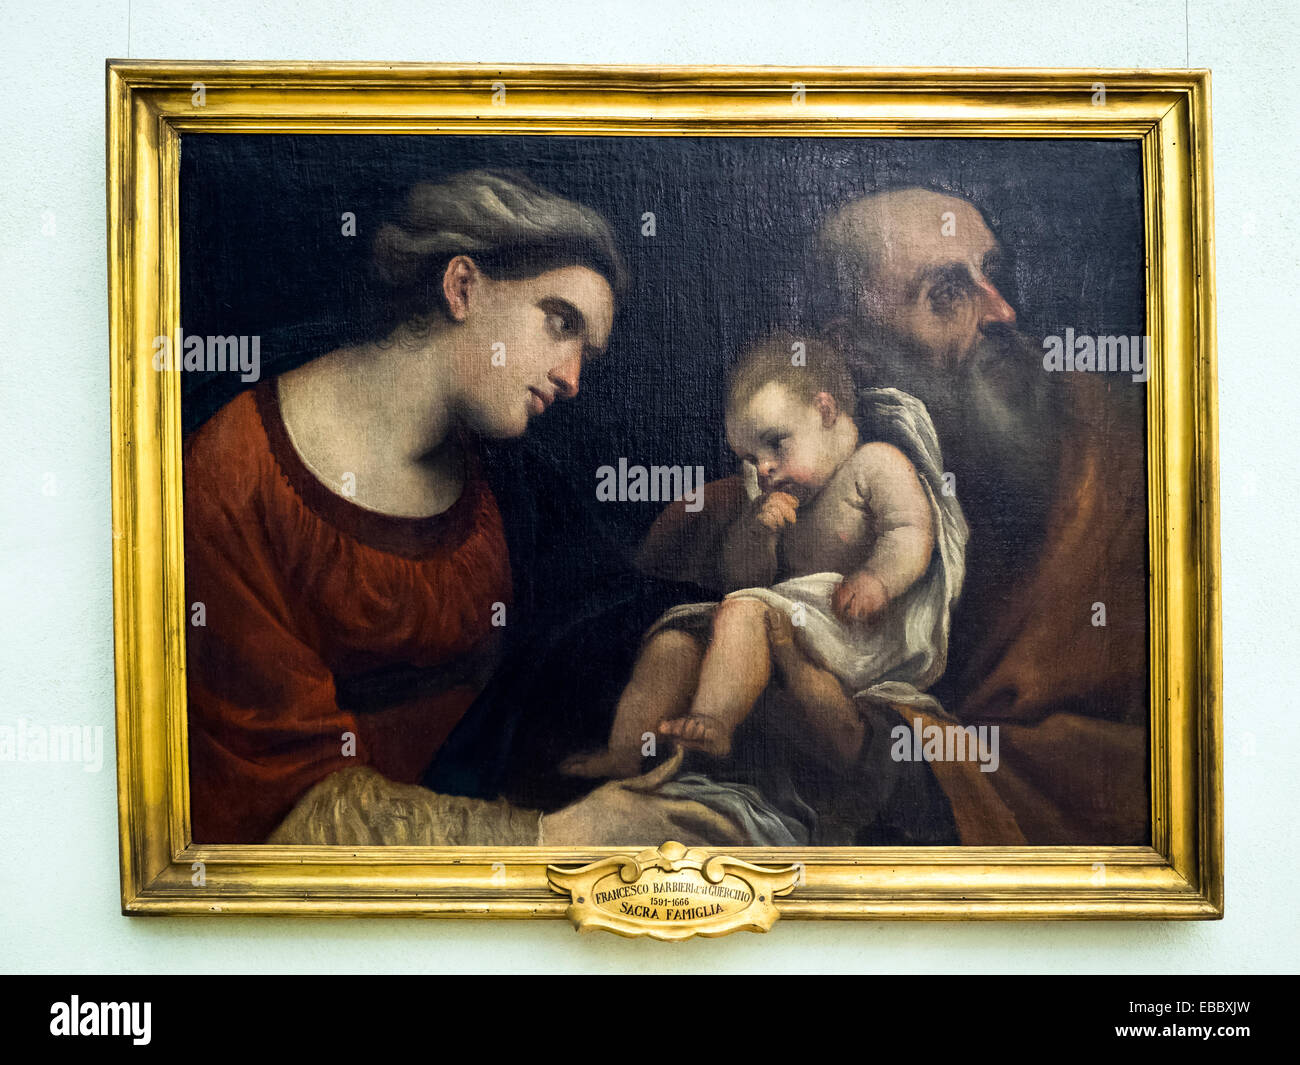 Guercino (Giovanni Francesco Barbieri, Cento 1591 - 1666 Bologna) Sacra Famiglia (Heilige Familie) Öl auf Leinwand Musei Capitolini - Rom, Italien Stockfoto